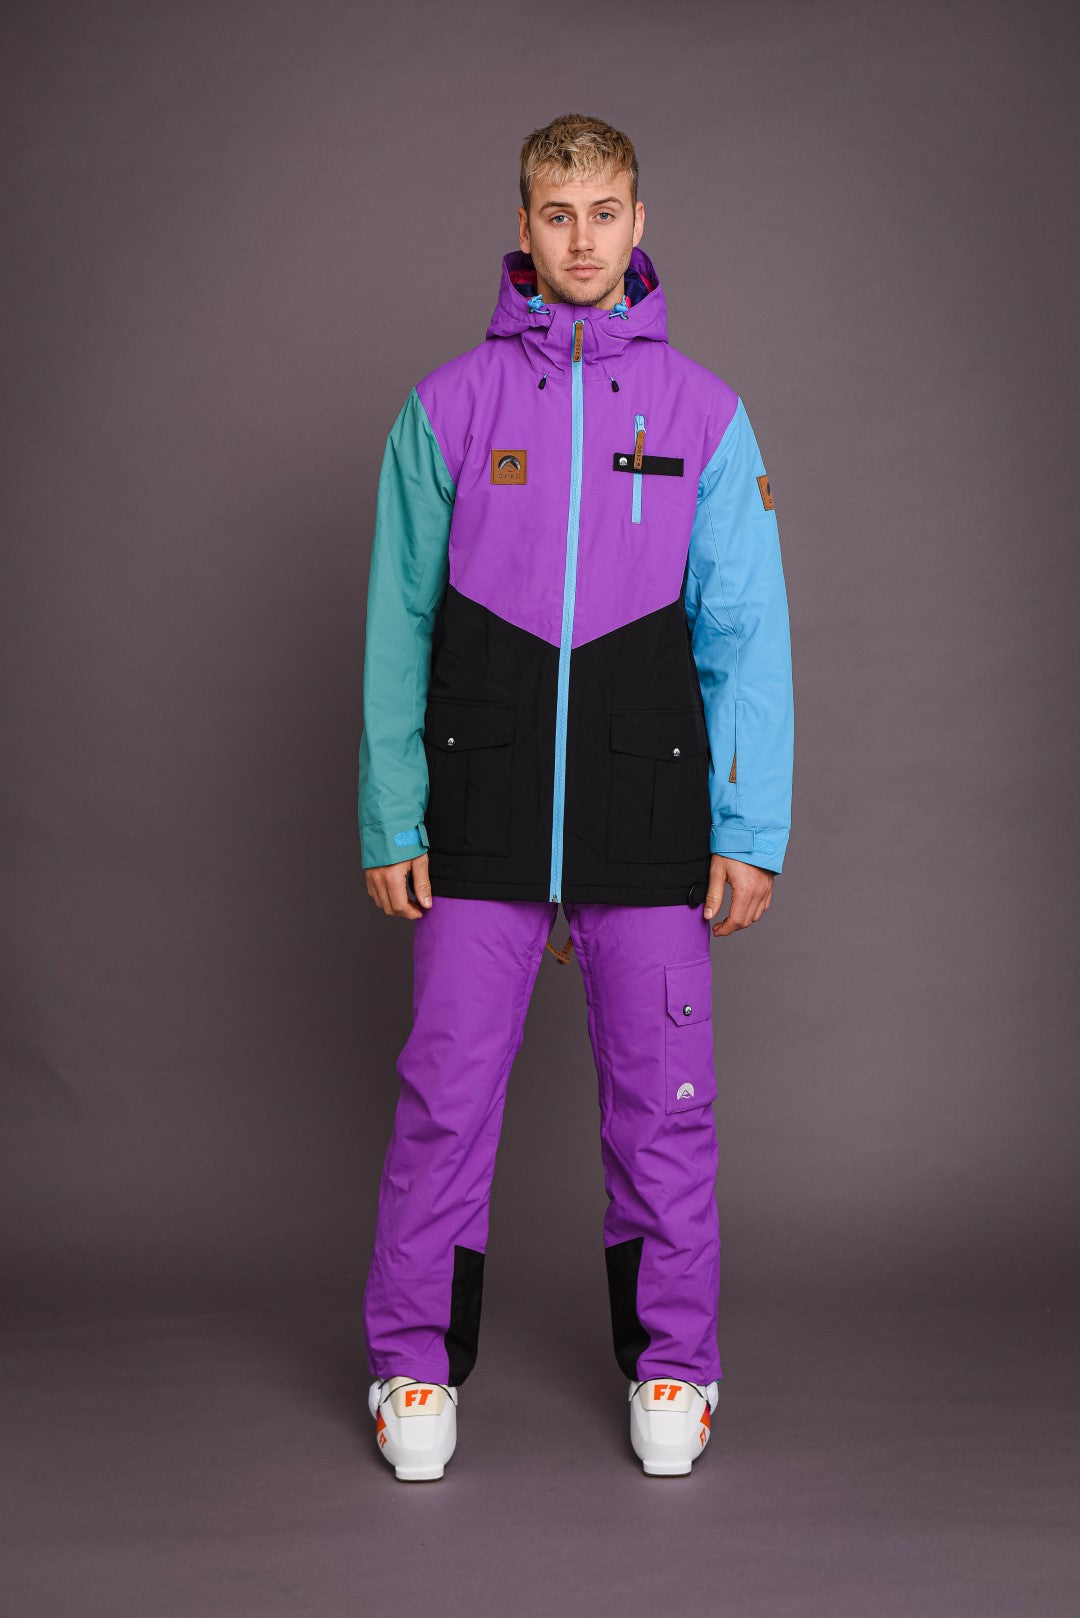 mens purple black ski outfit